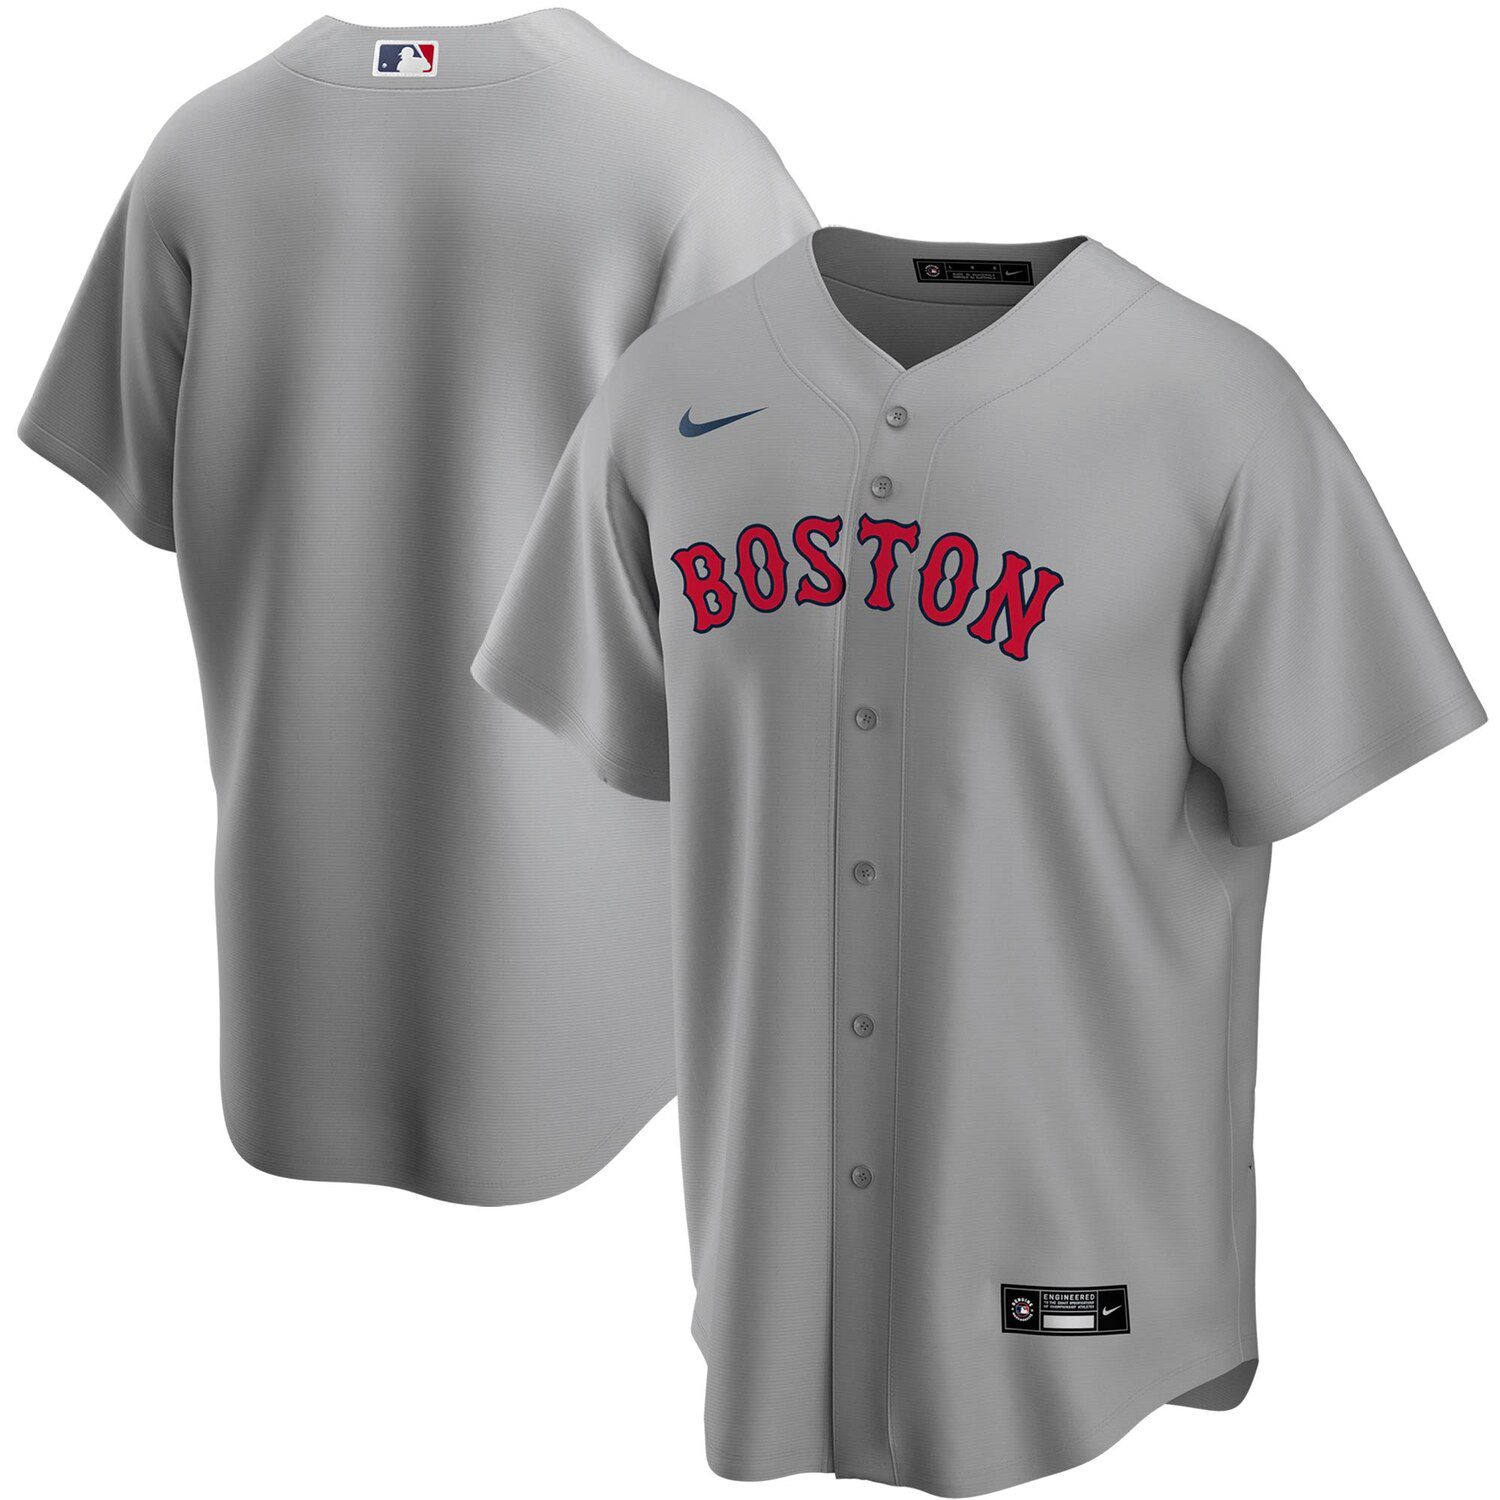 boston grey jersey